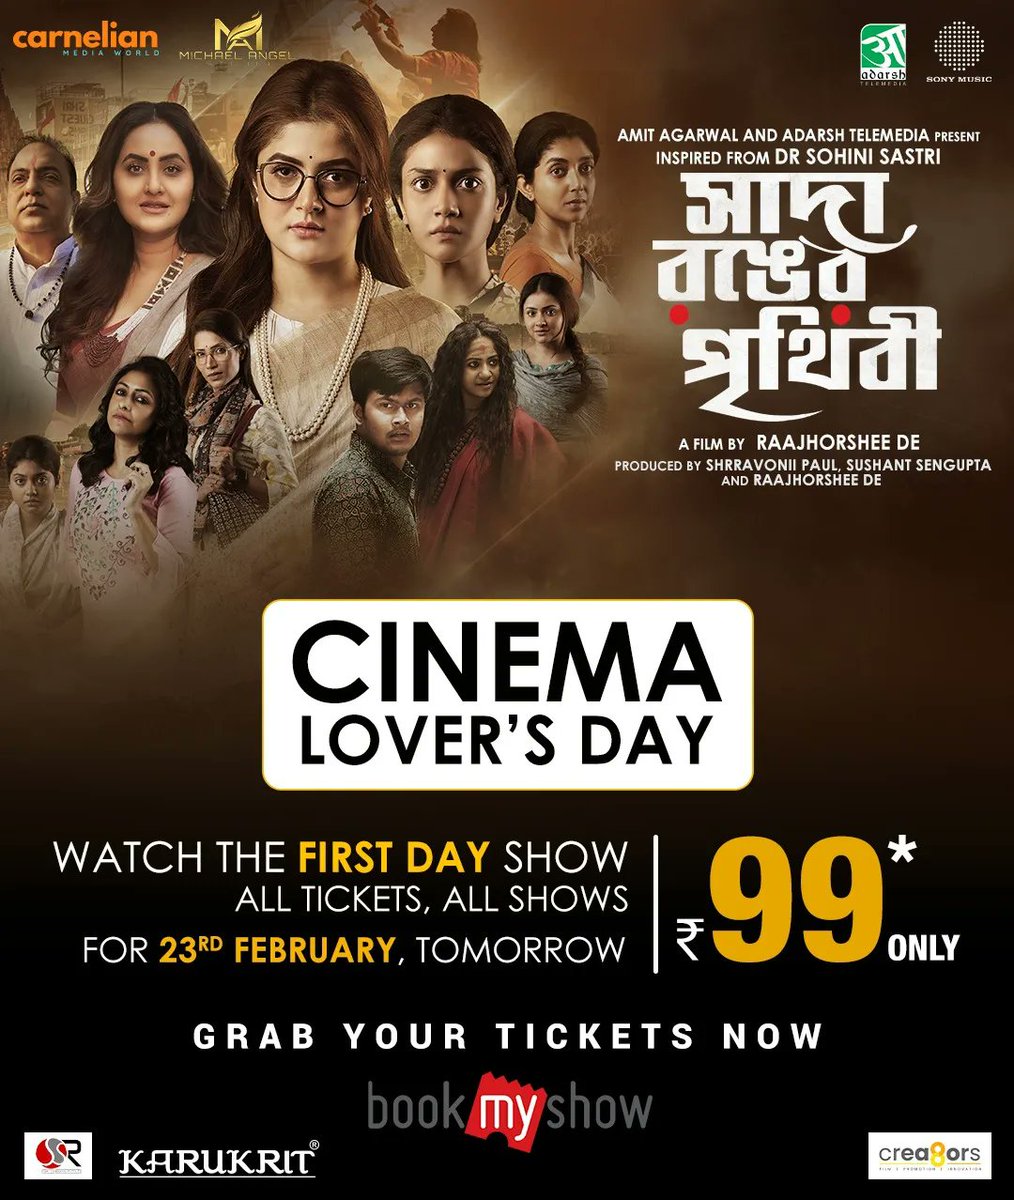 Hall List of #SadaRongerPrithibi 
Go and grab your tickets

#grandrelease #CinemaLoversDay